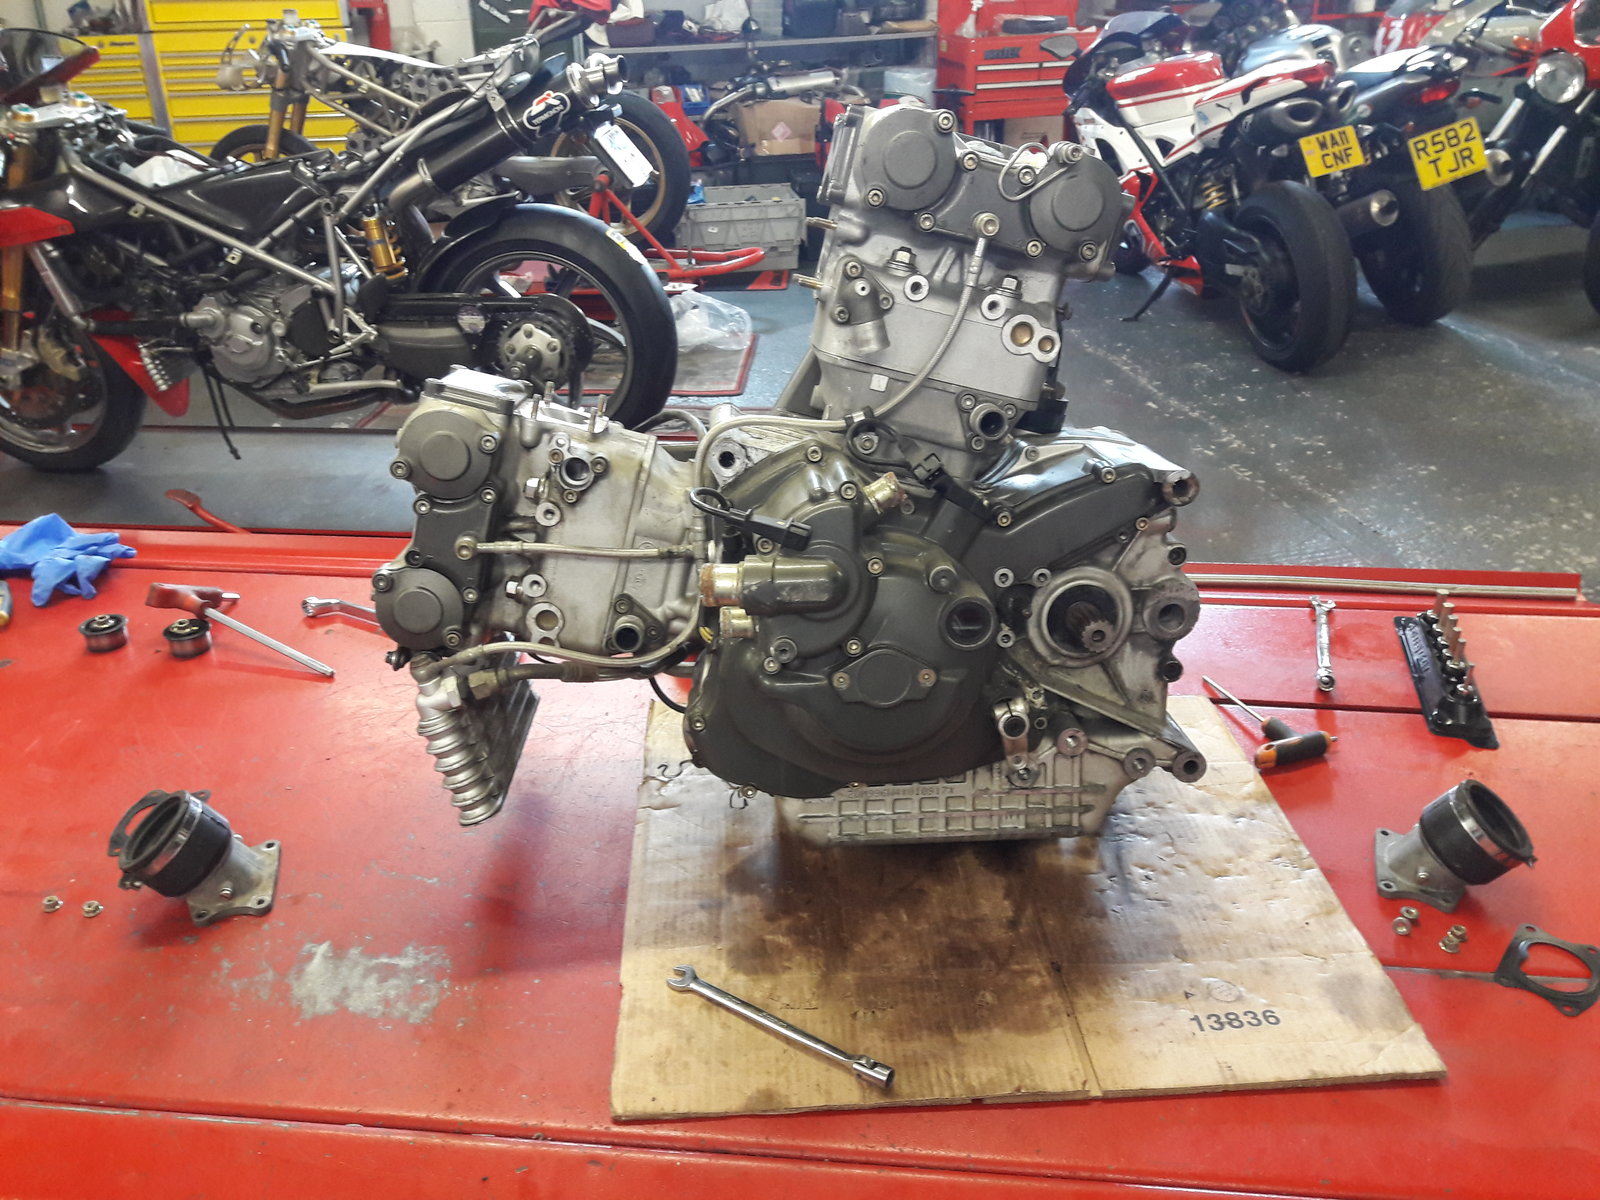 996 996 Sps Rebuild Ducati Forum